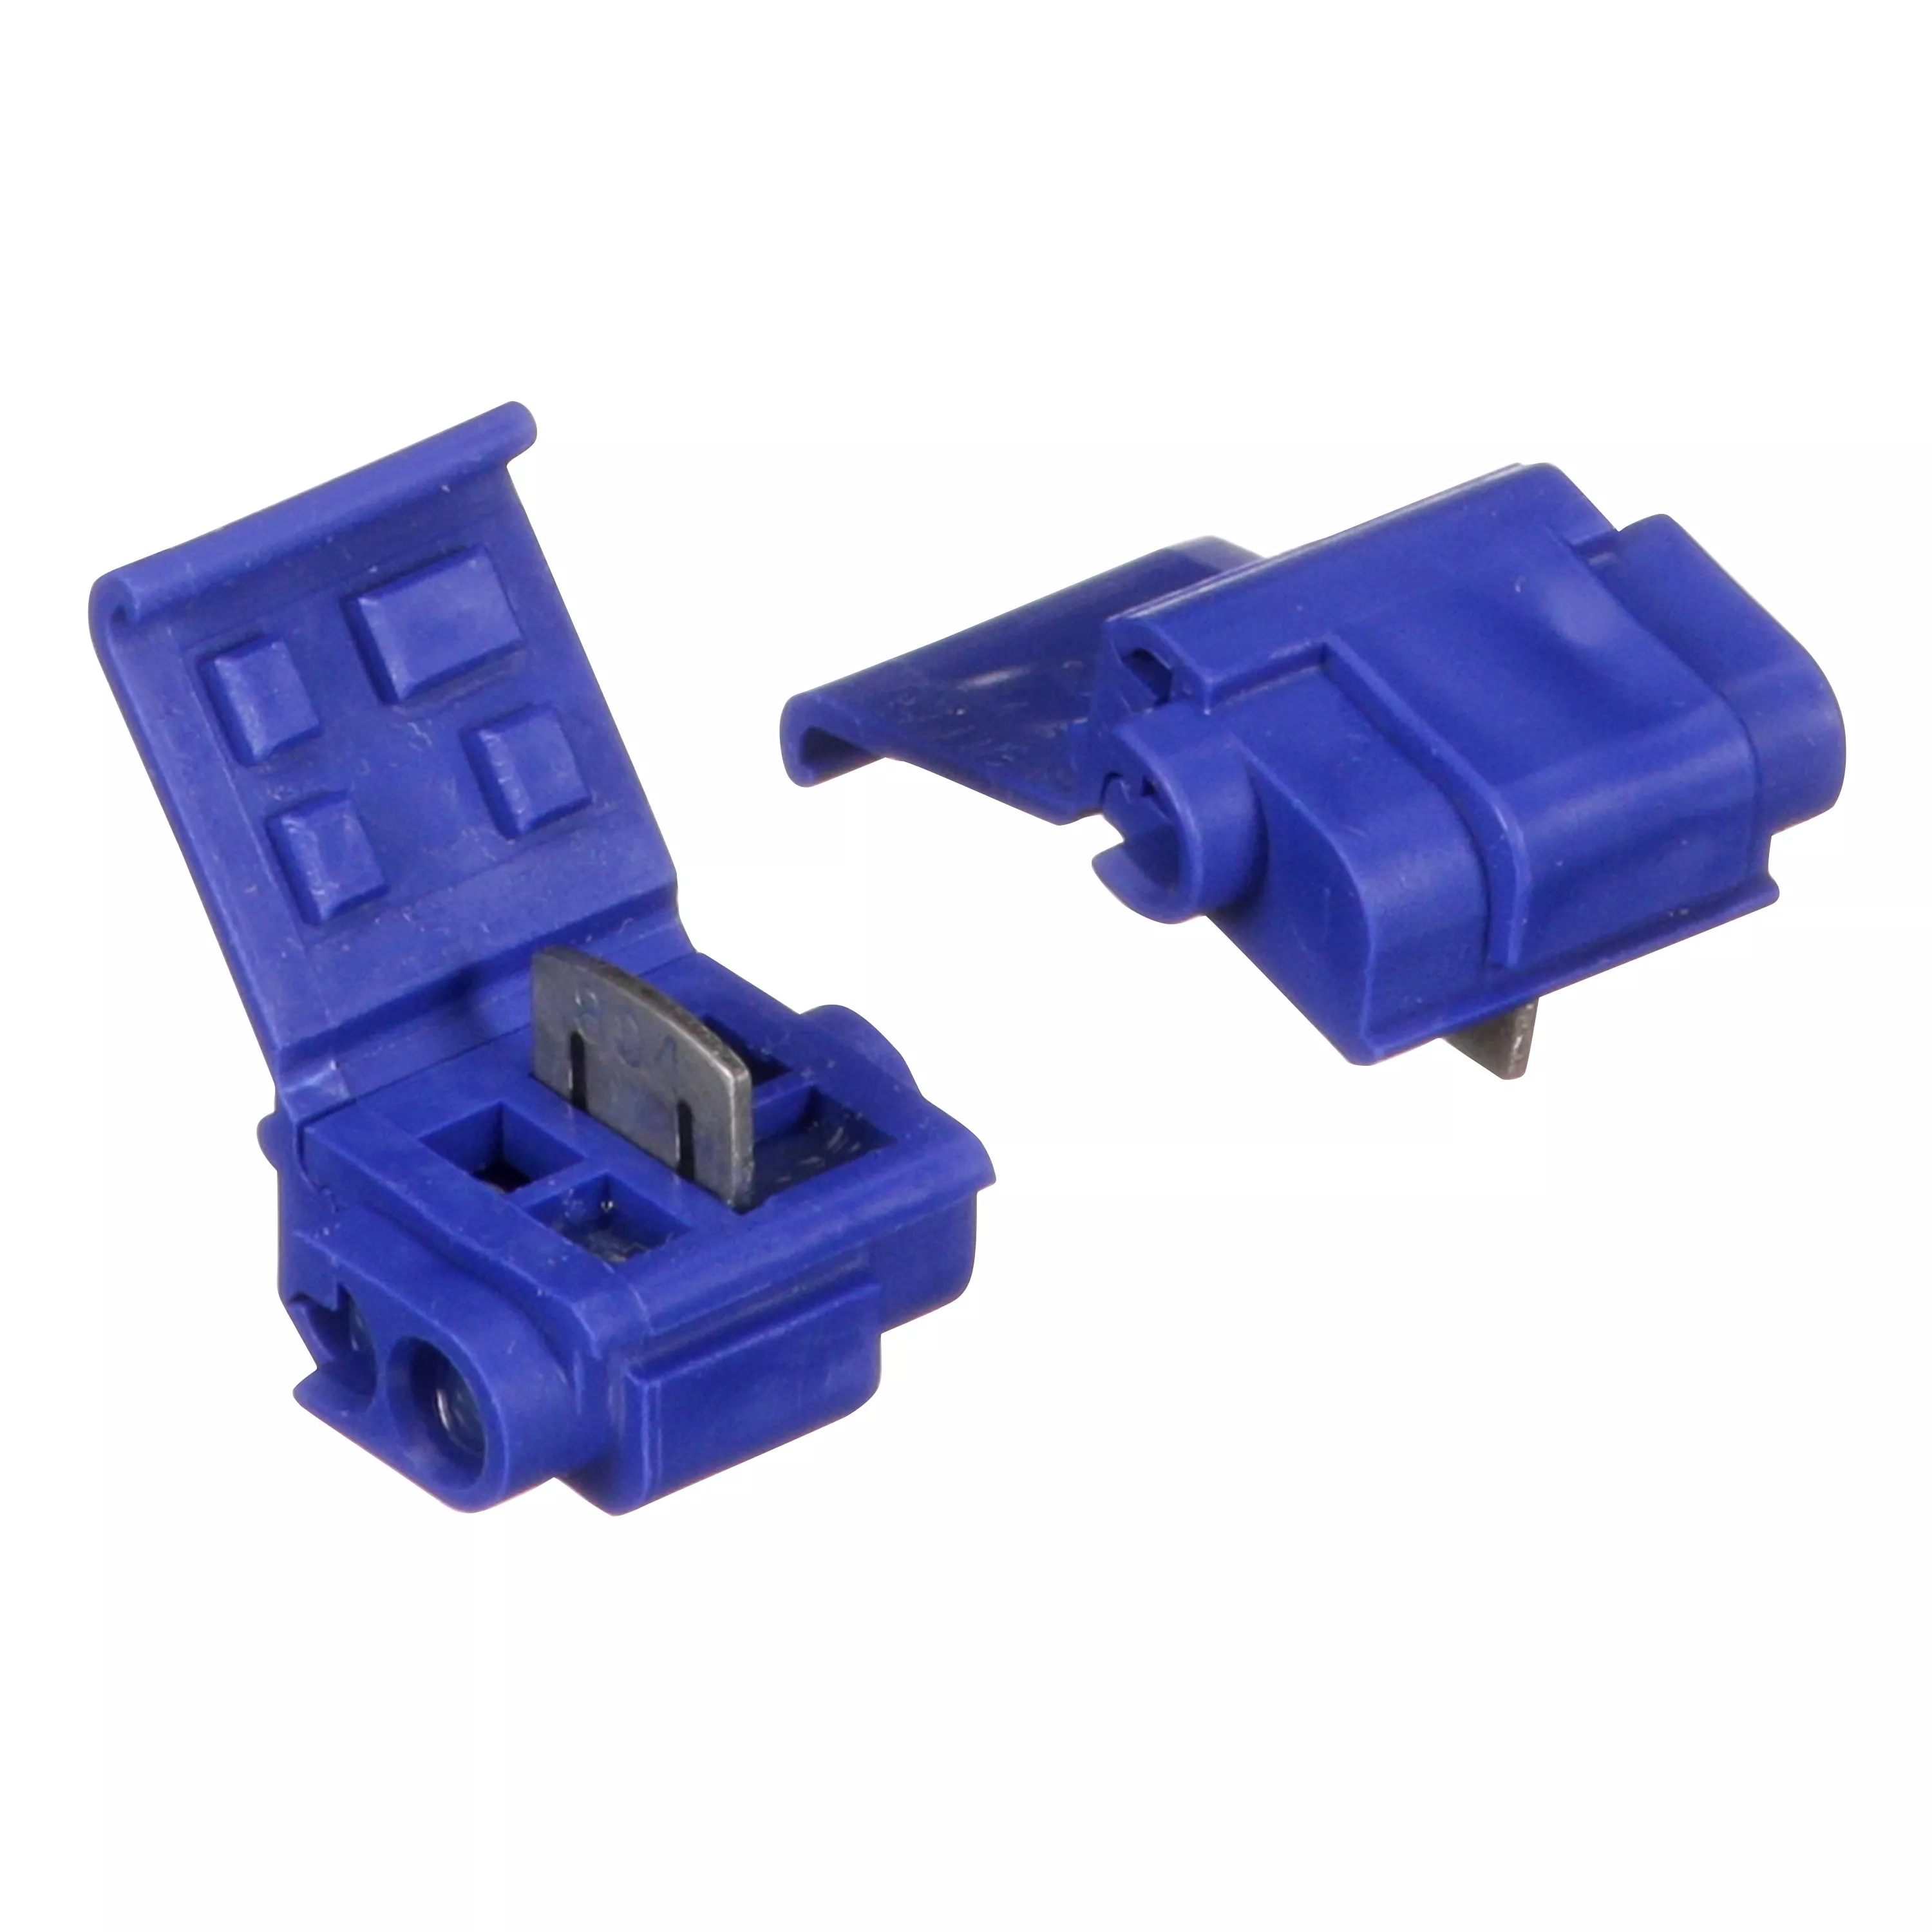 3M™ Scotchlok™ Electrical IDC 804-BULK, Blue, 18-16 AWG
(solid/stranded), 14 AWG (stranded), 500 per carton, 5000/case